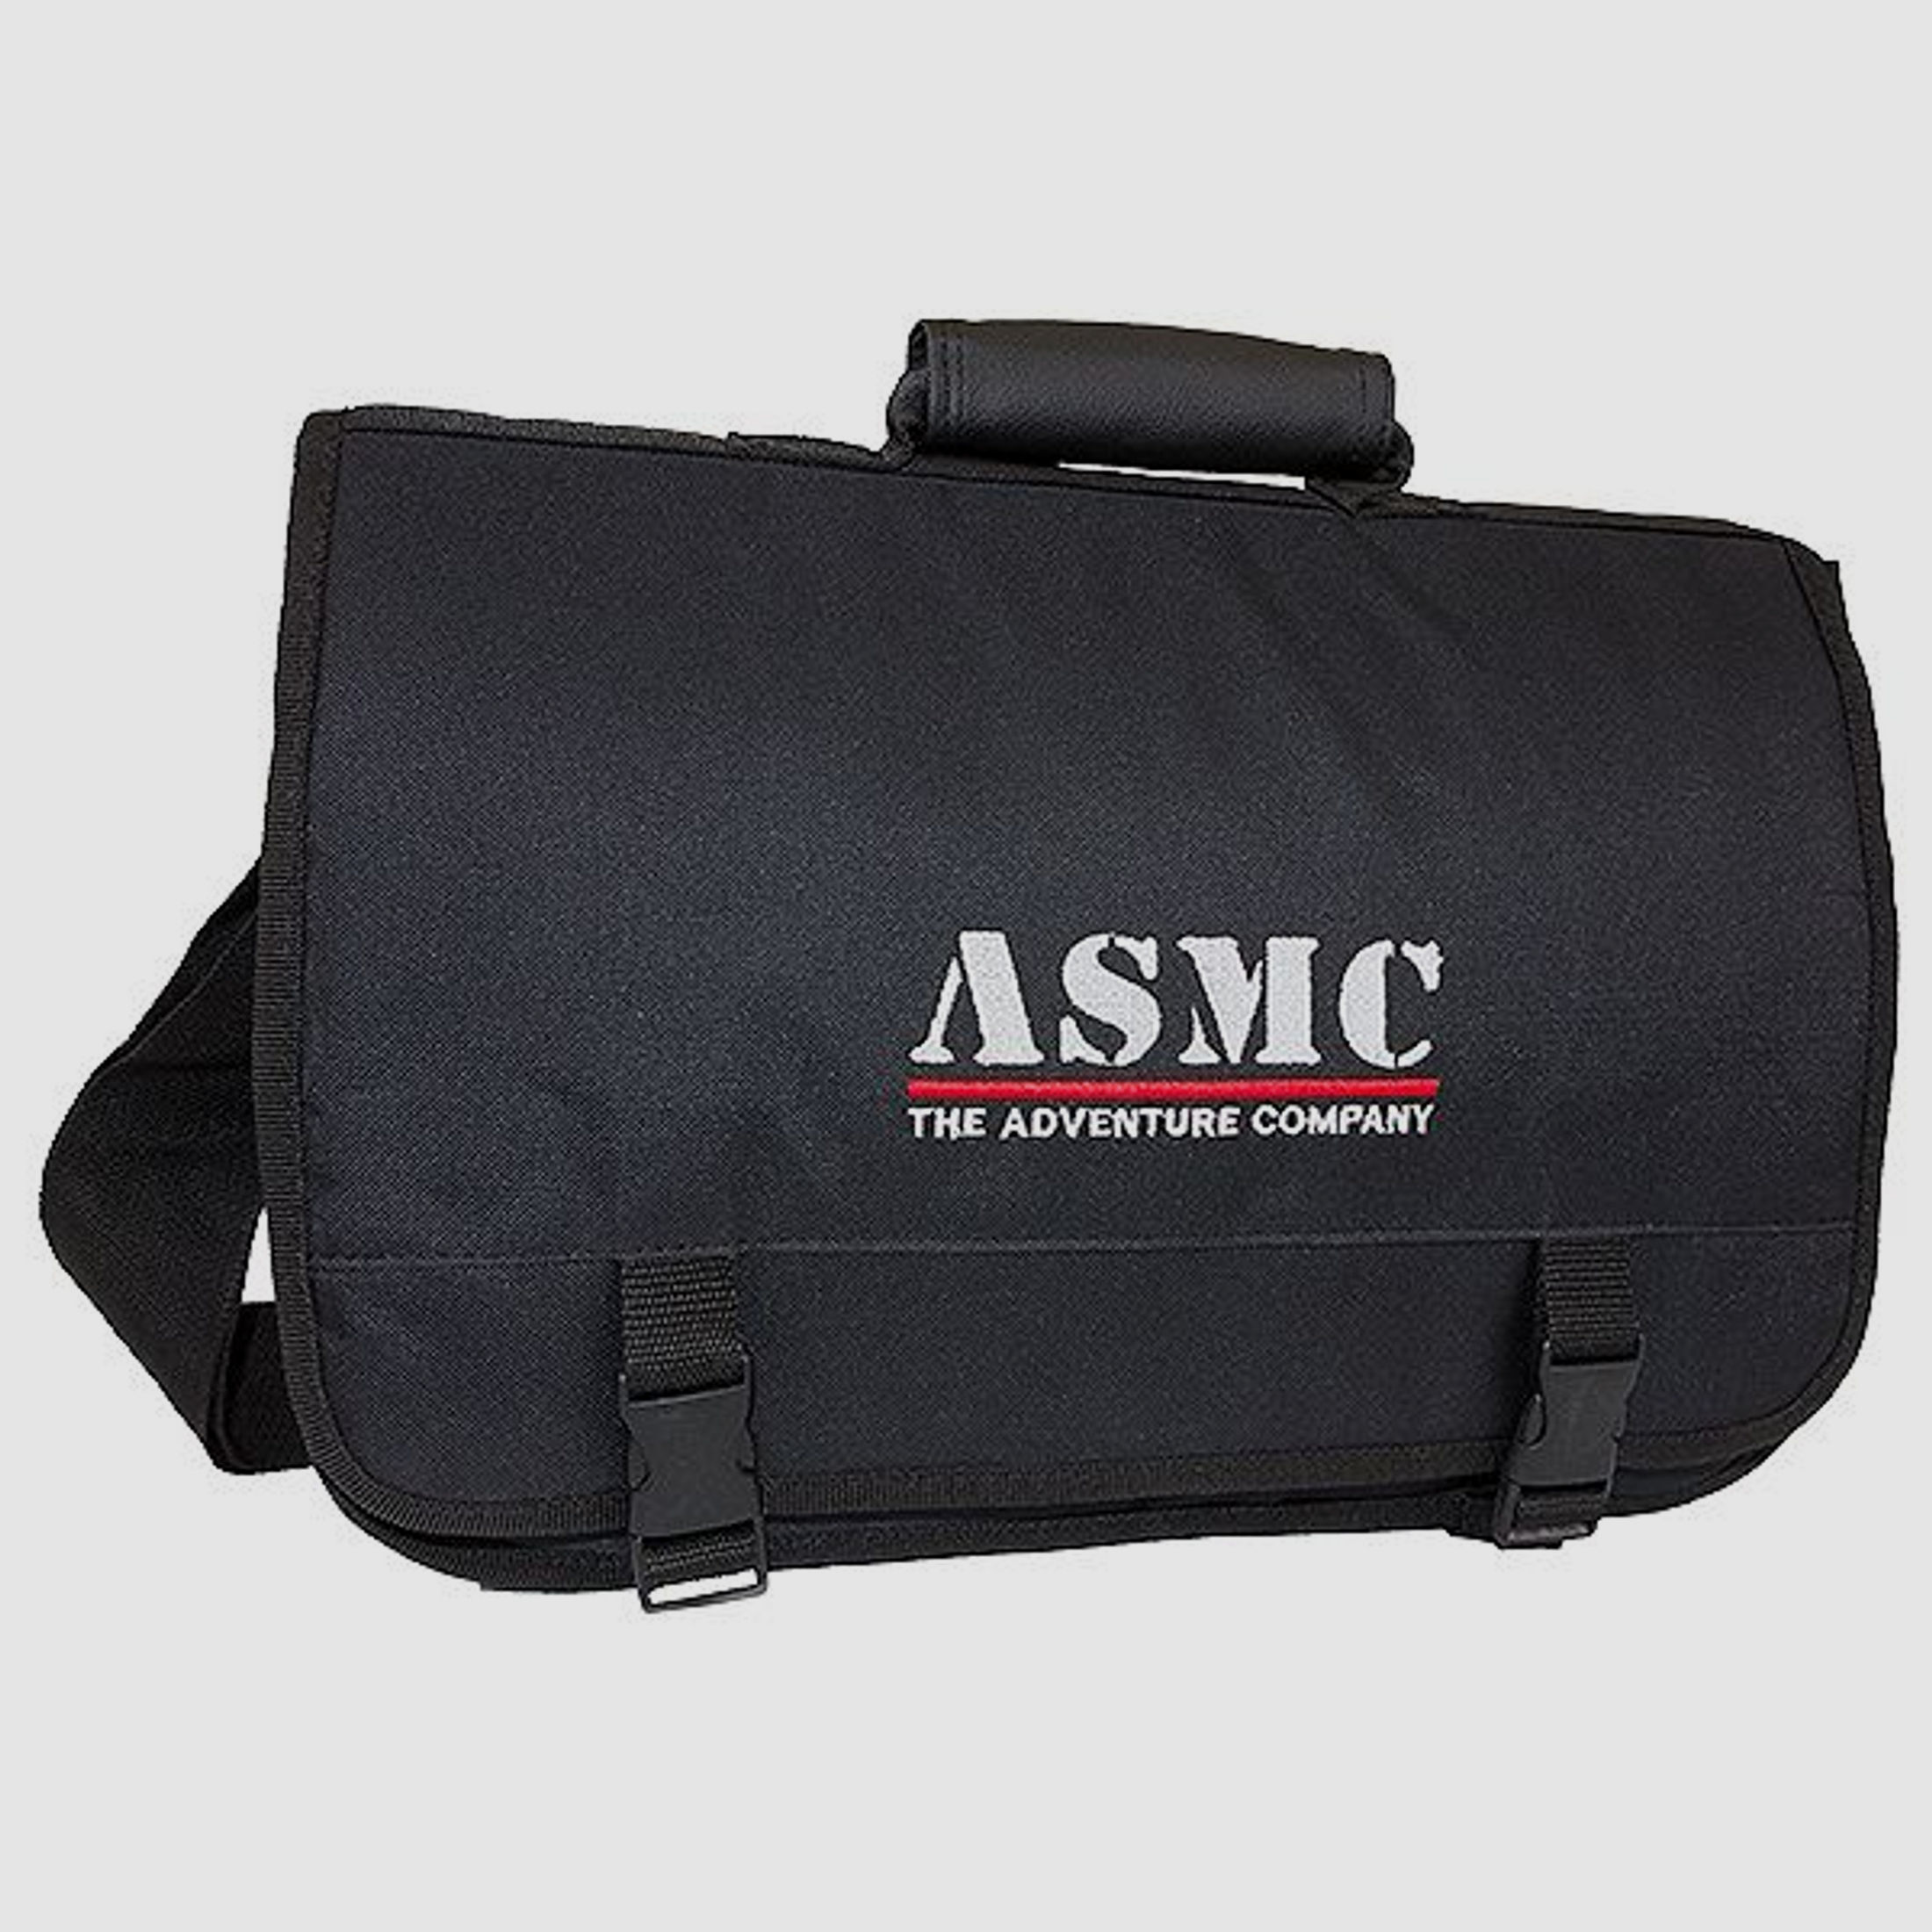 ASMC ASMC Notebooktasche 15 Zoll schwarz